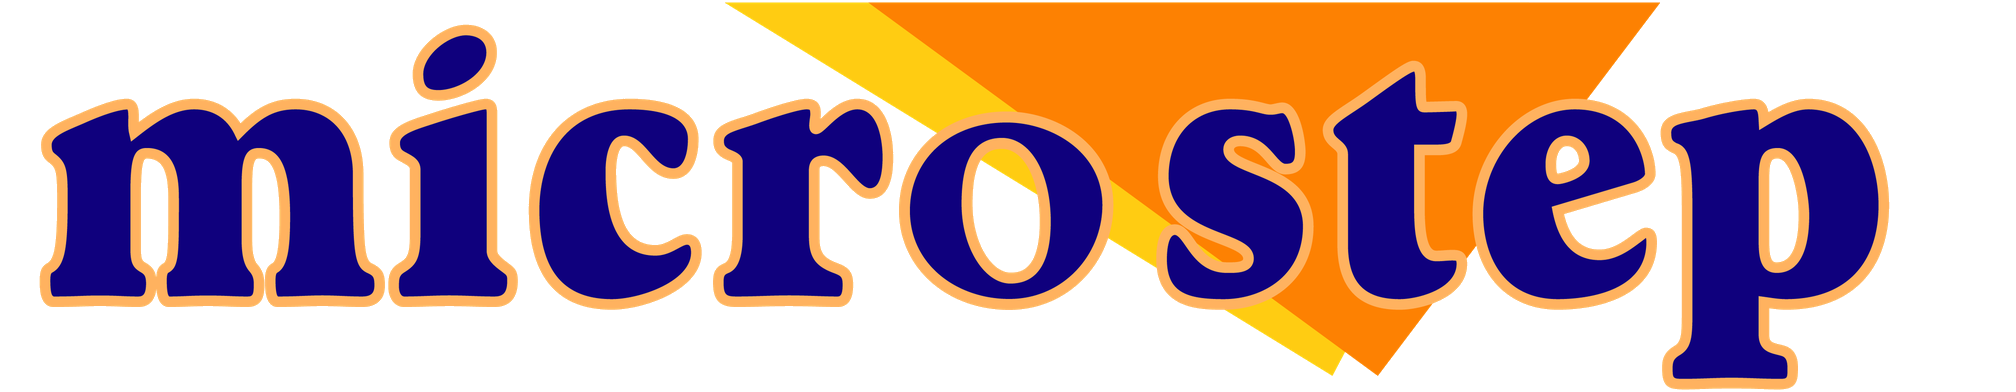 Microstep Logo